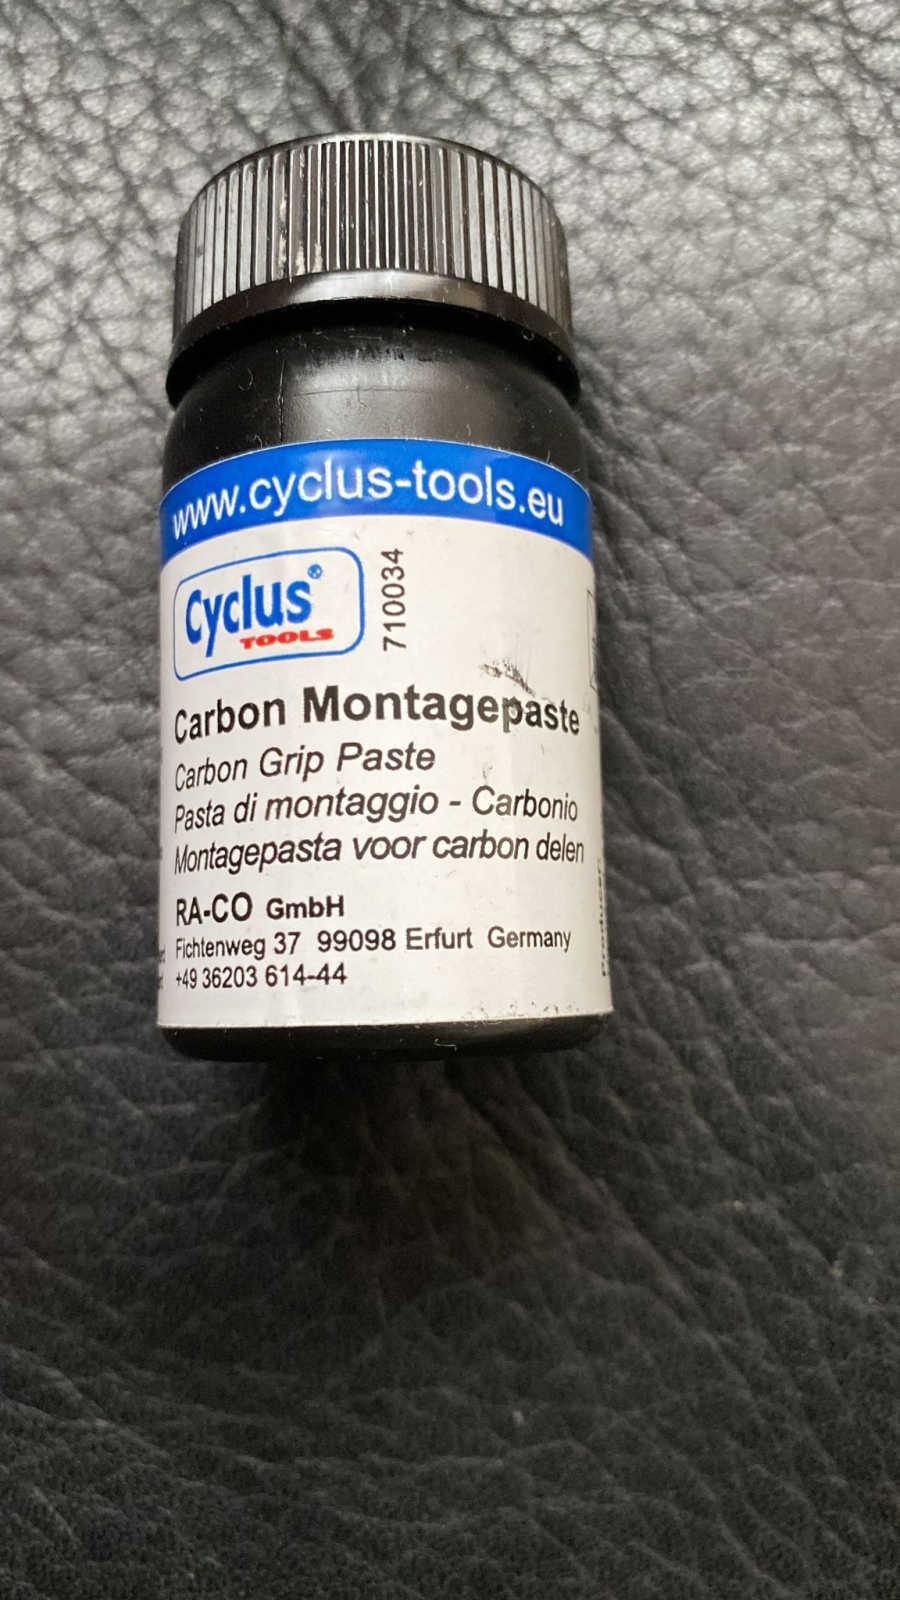 Carbon montagepaste